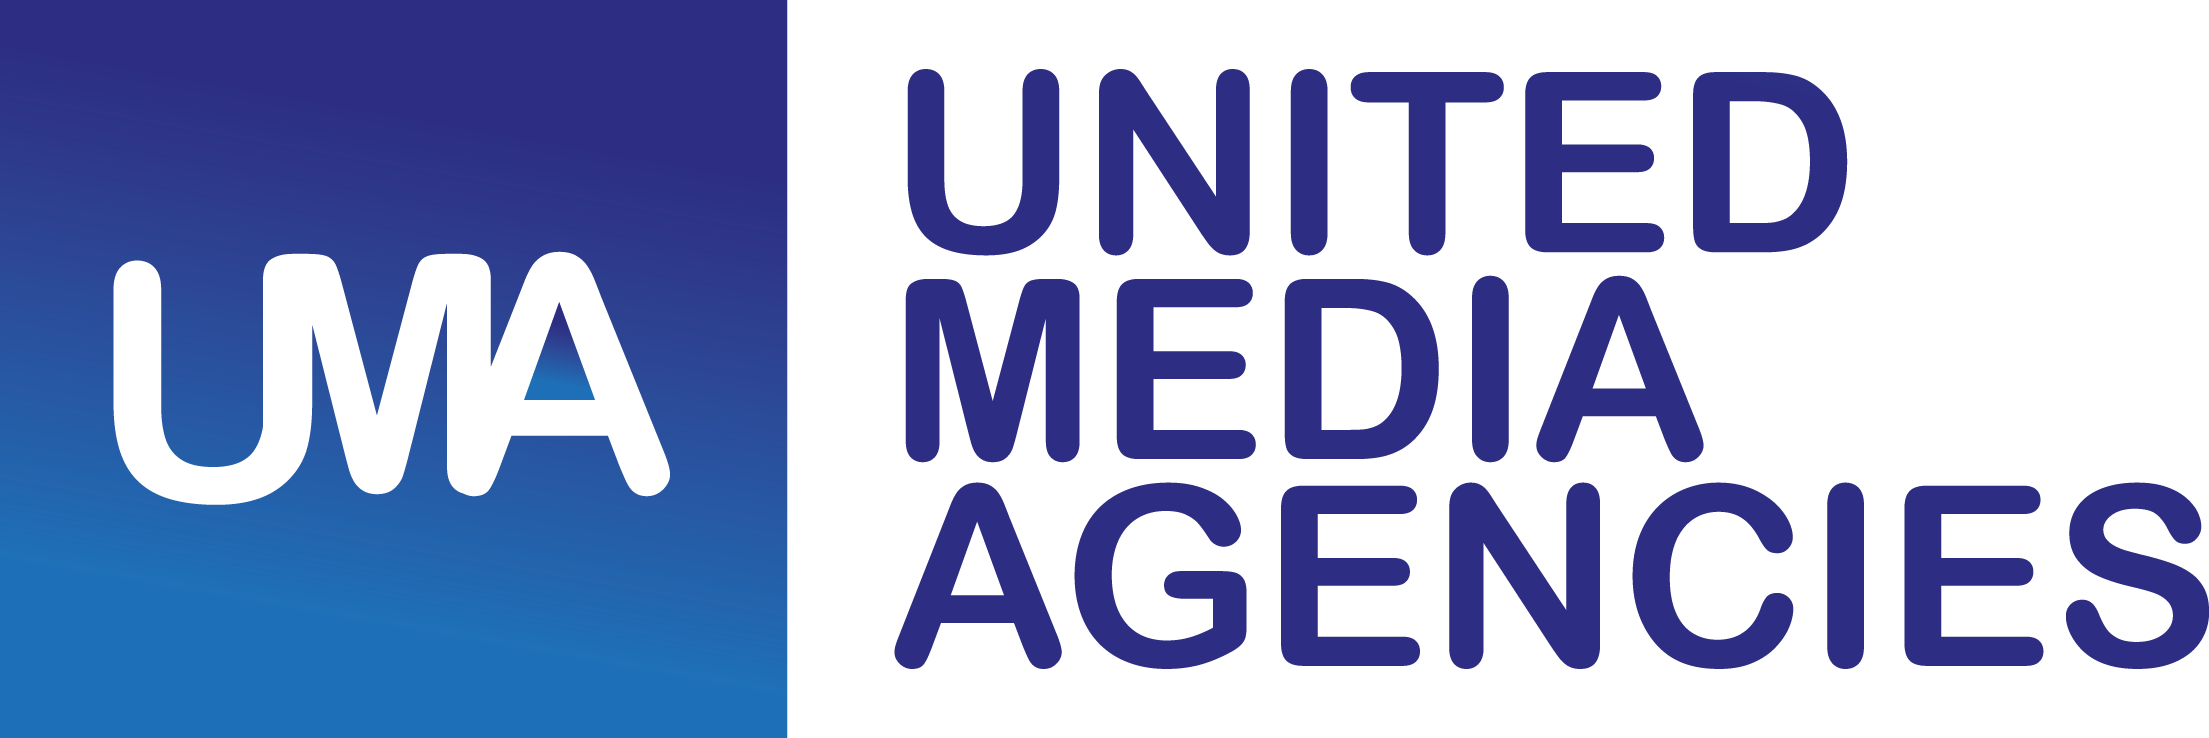 Media agency. Media агентство. Агентство United Media. Объединенное Медиа агентство. Ум логотип.